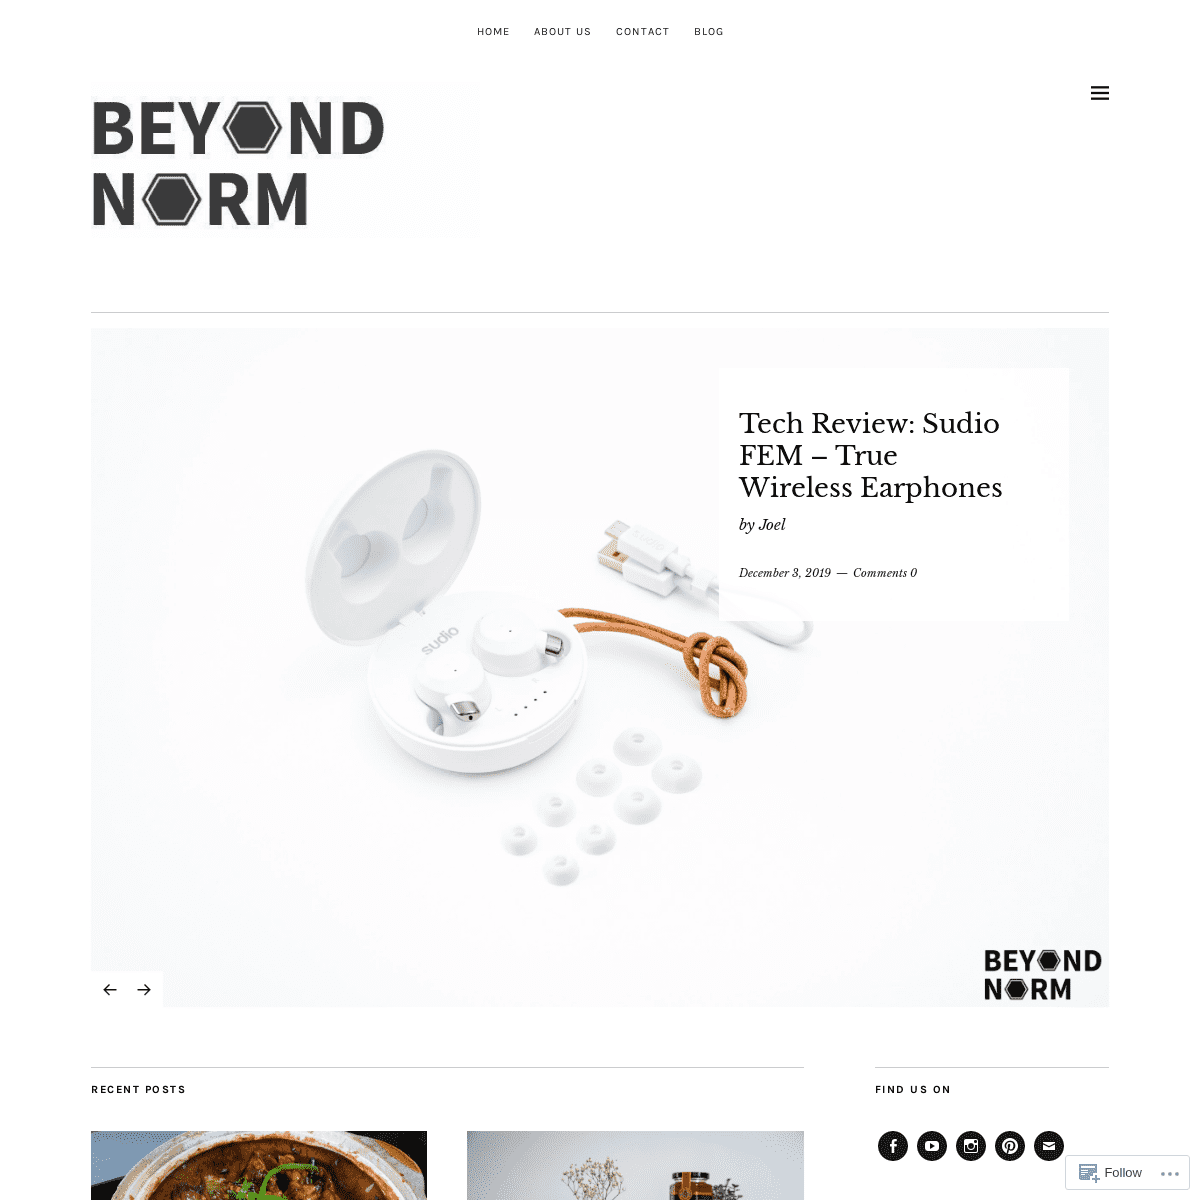 A complete backup of beyondnorm.com